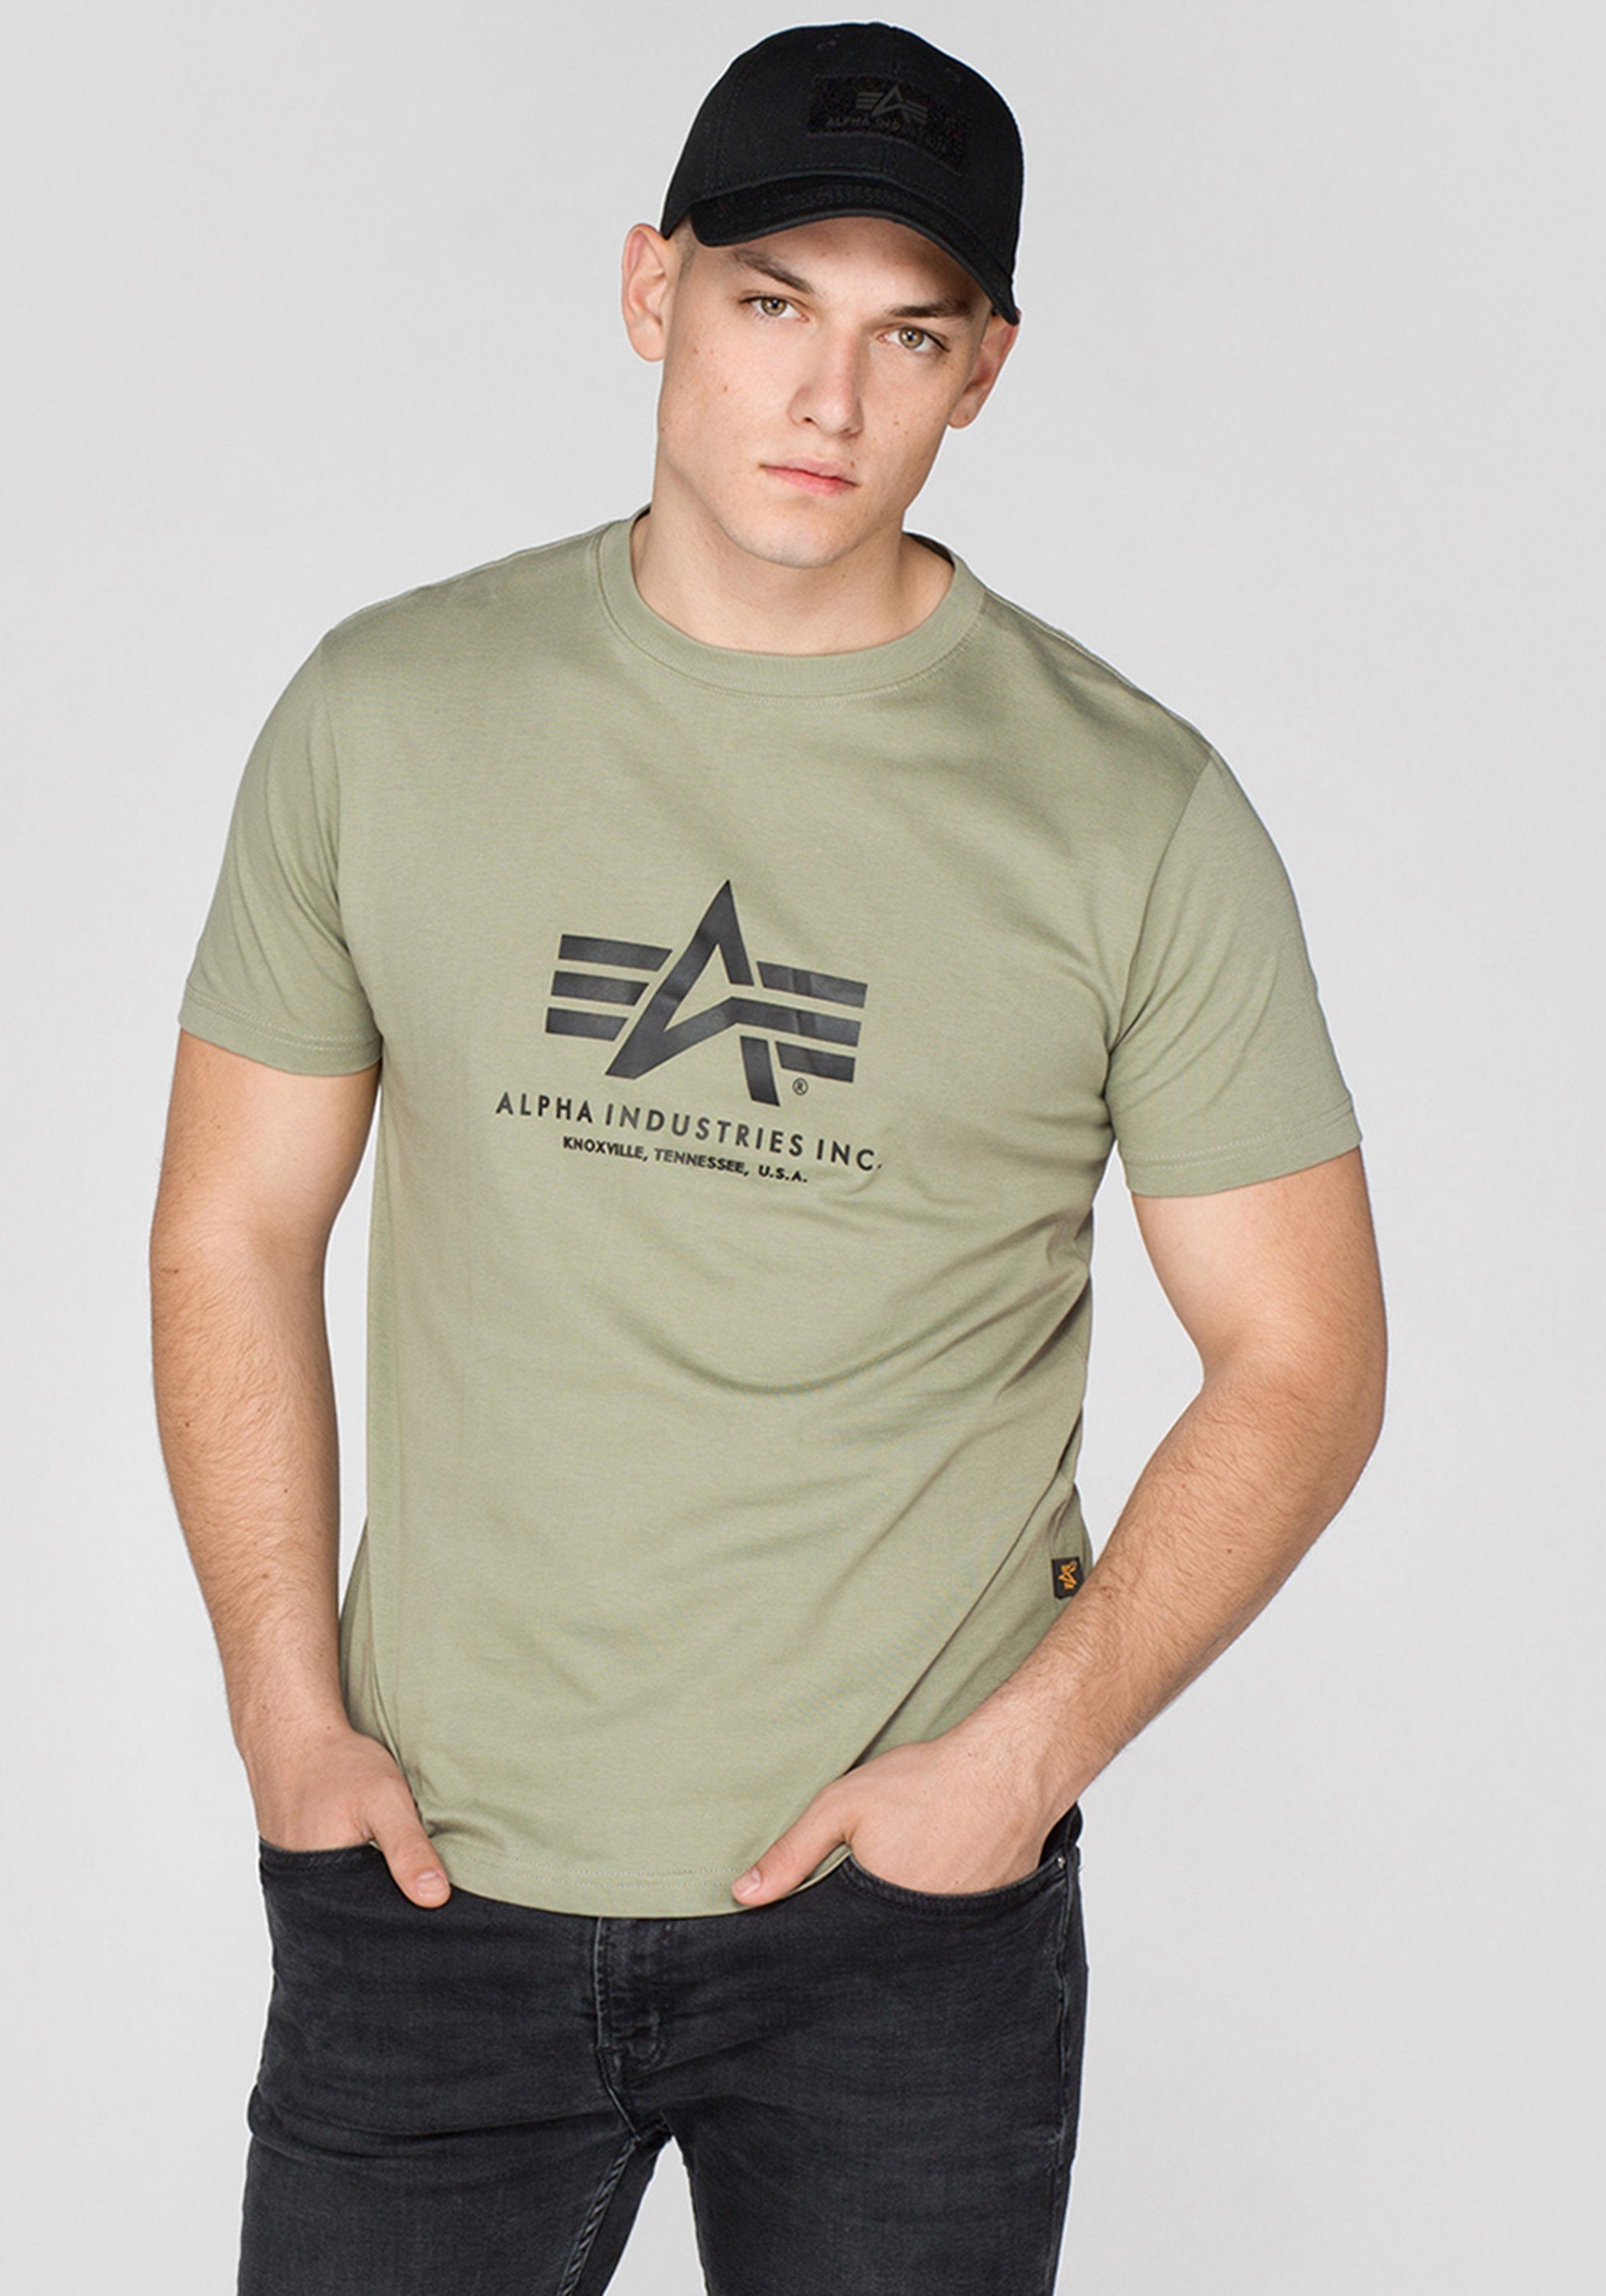 T-Shirts Basic Industries T-Shirt Men olive Industries T-Shirt Alpha - Alpha